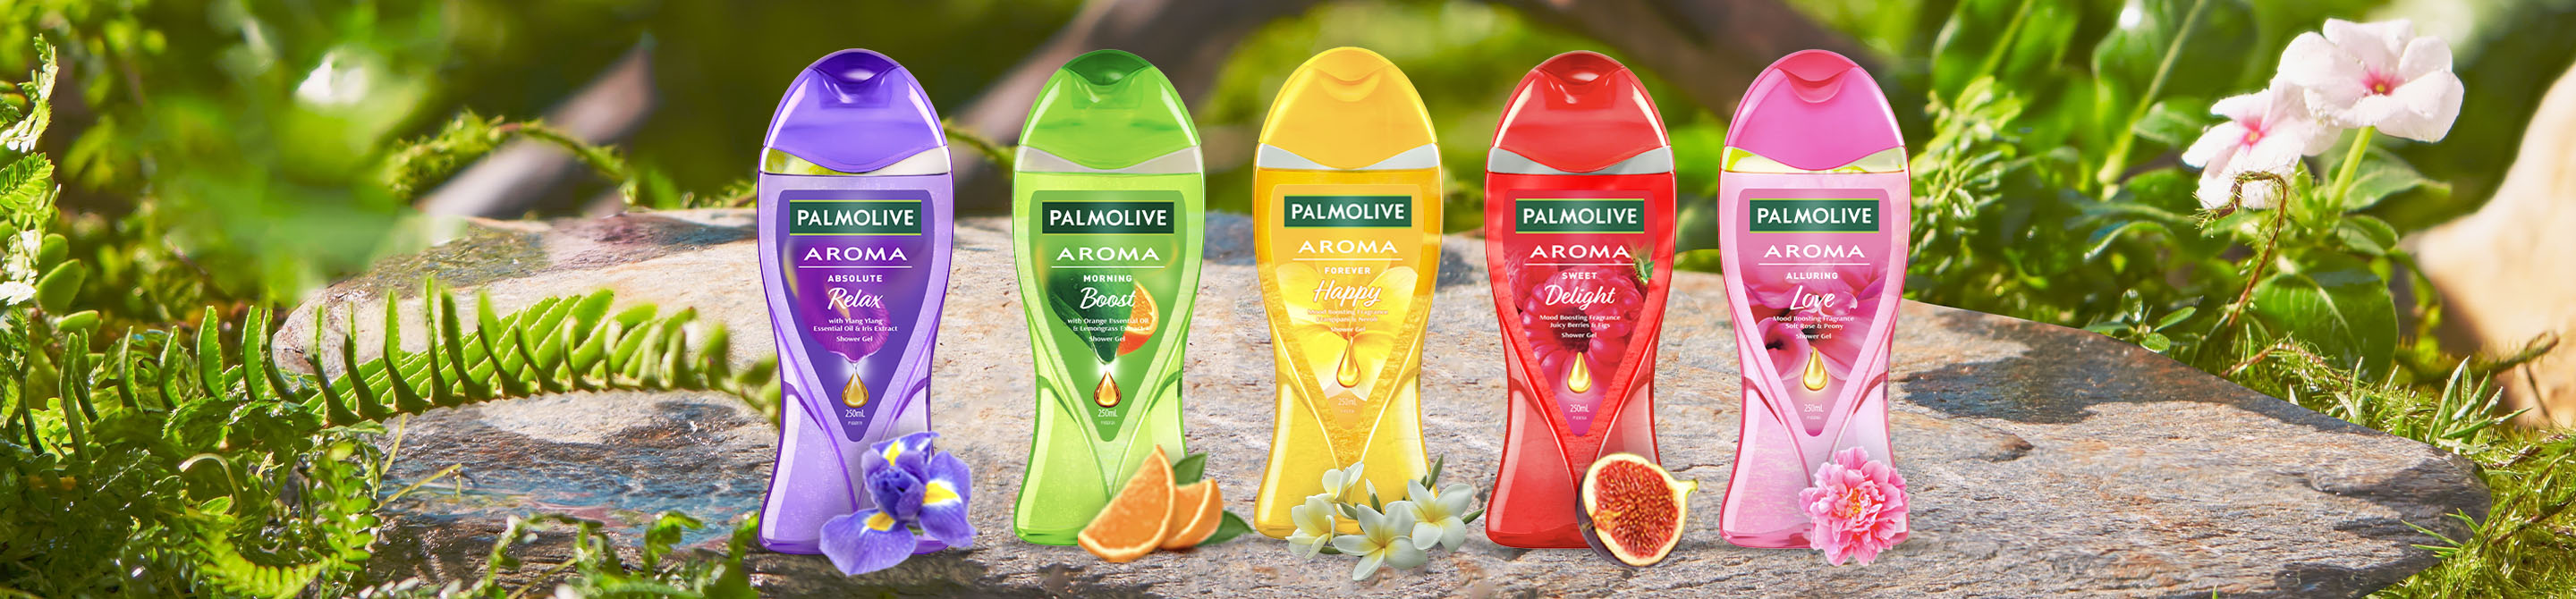 Palmolive BodyWash Range Products